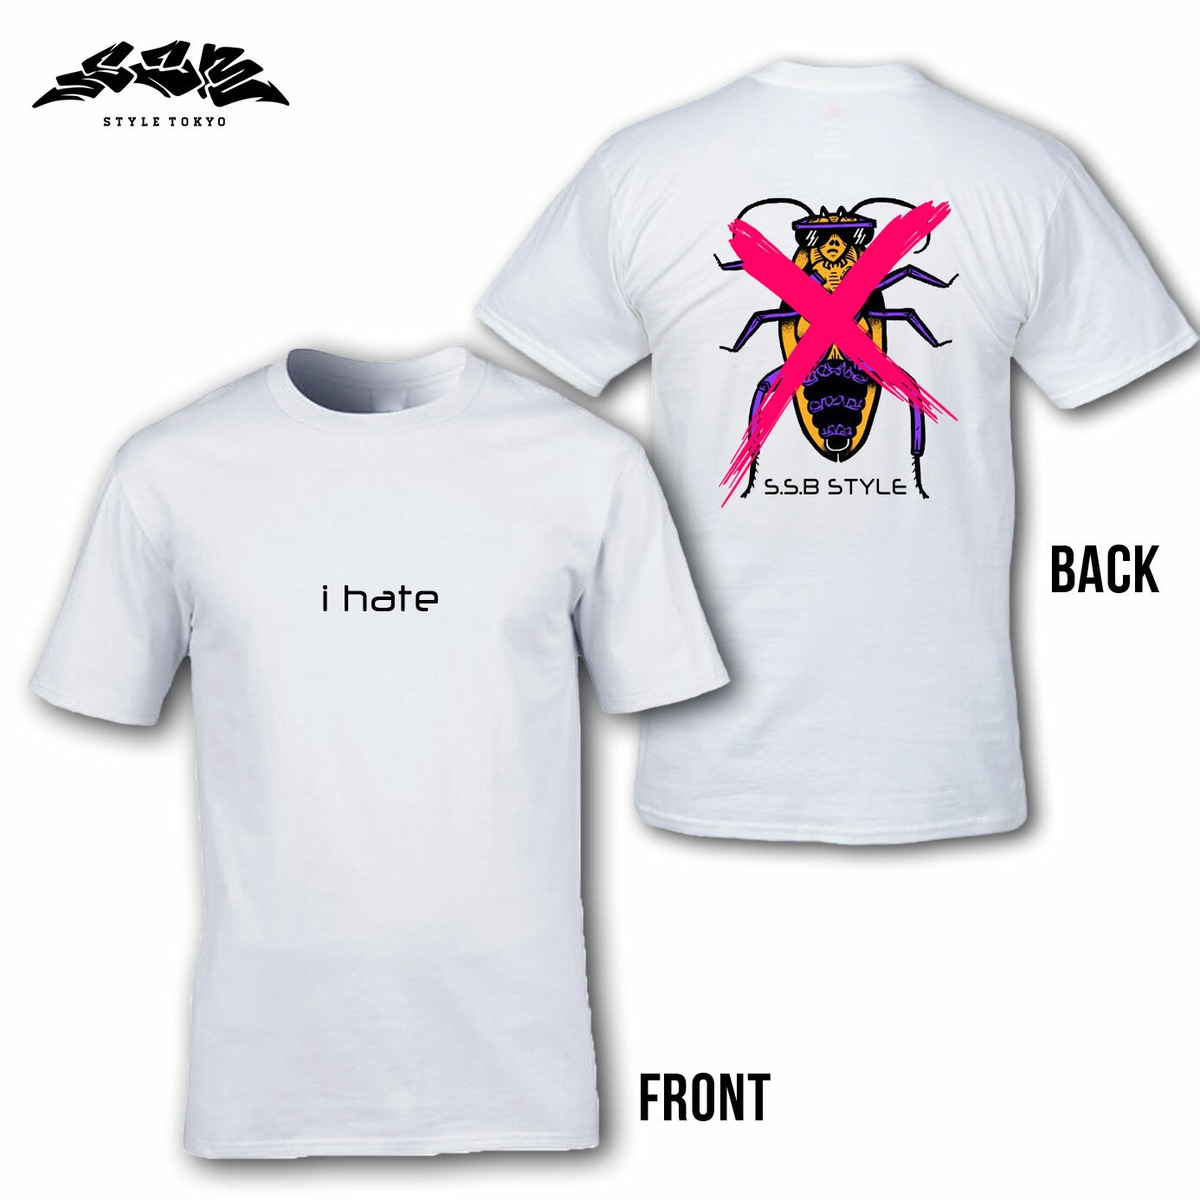 " i hate " T-shirt | SSB style tokyo